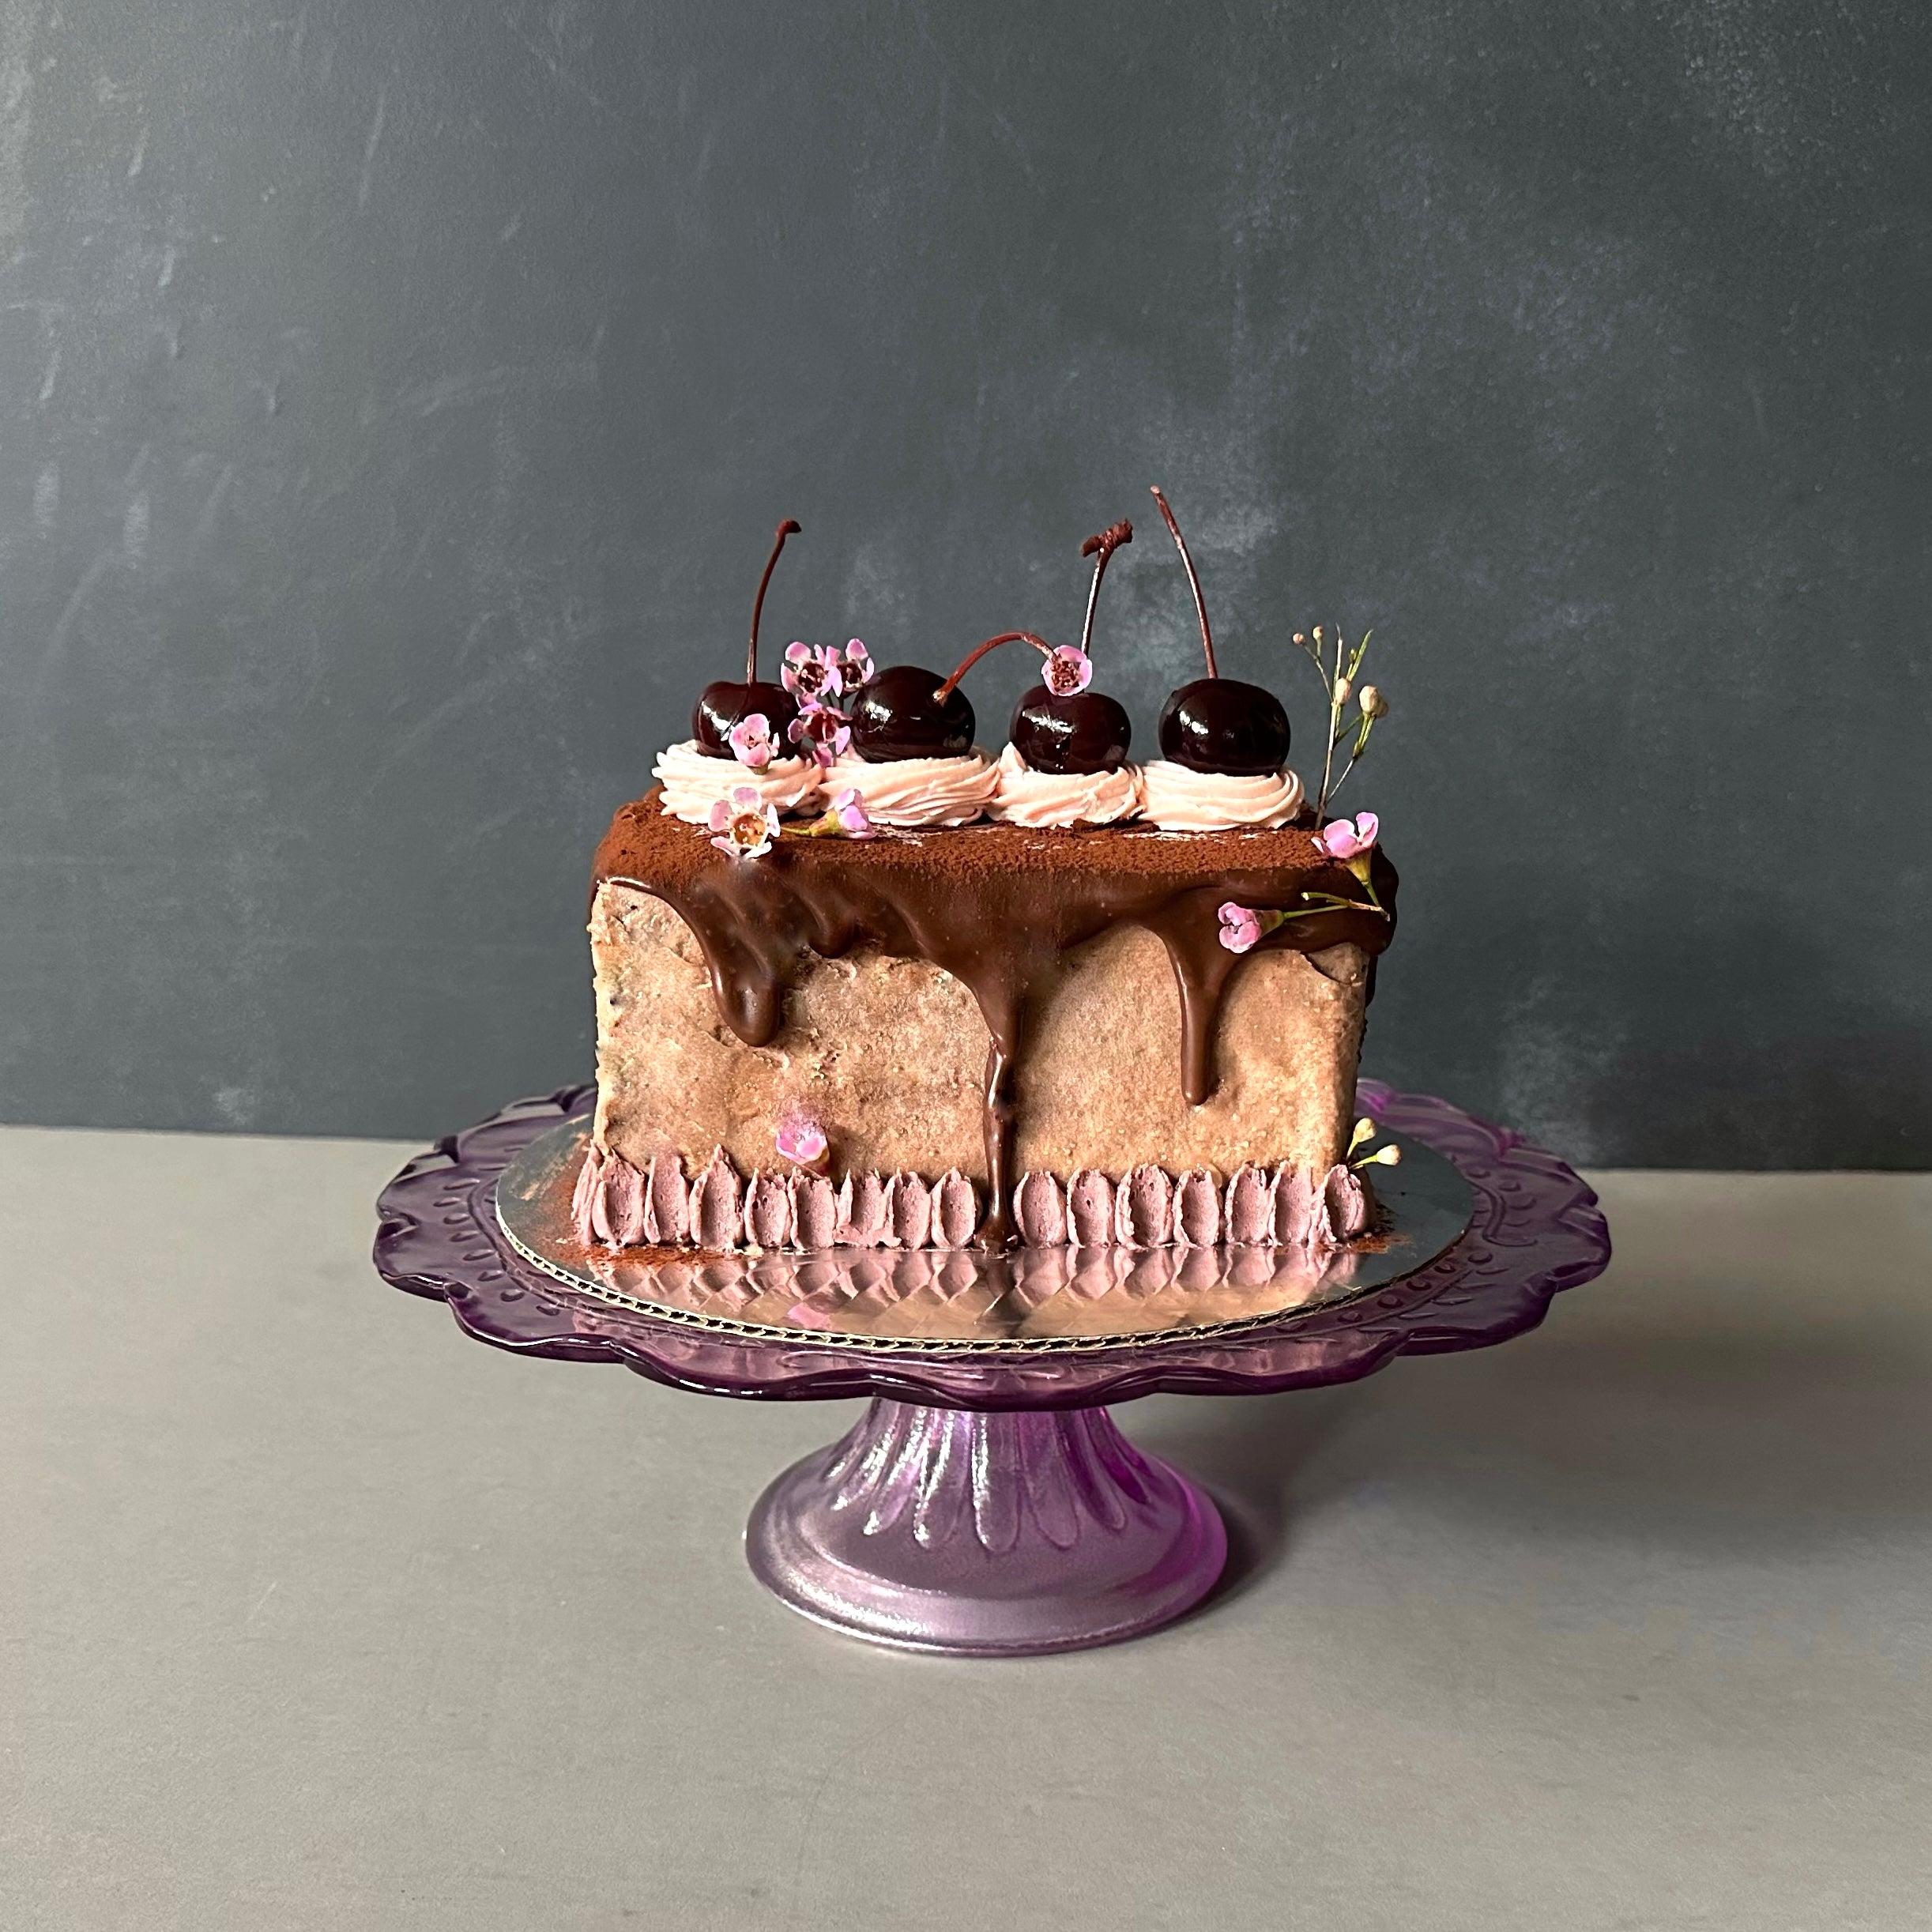 Cherry Chocolate Mousse Cake Recipe (video) - Tatyanas Everyday Food